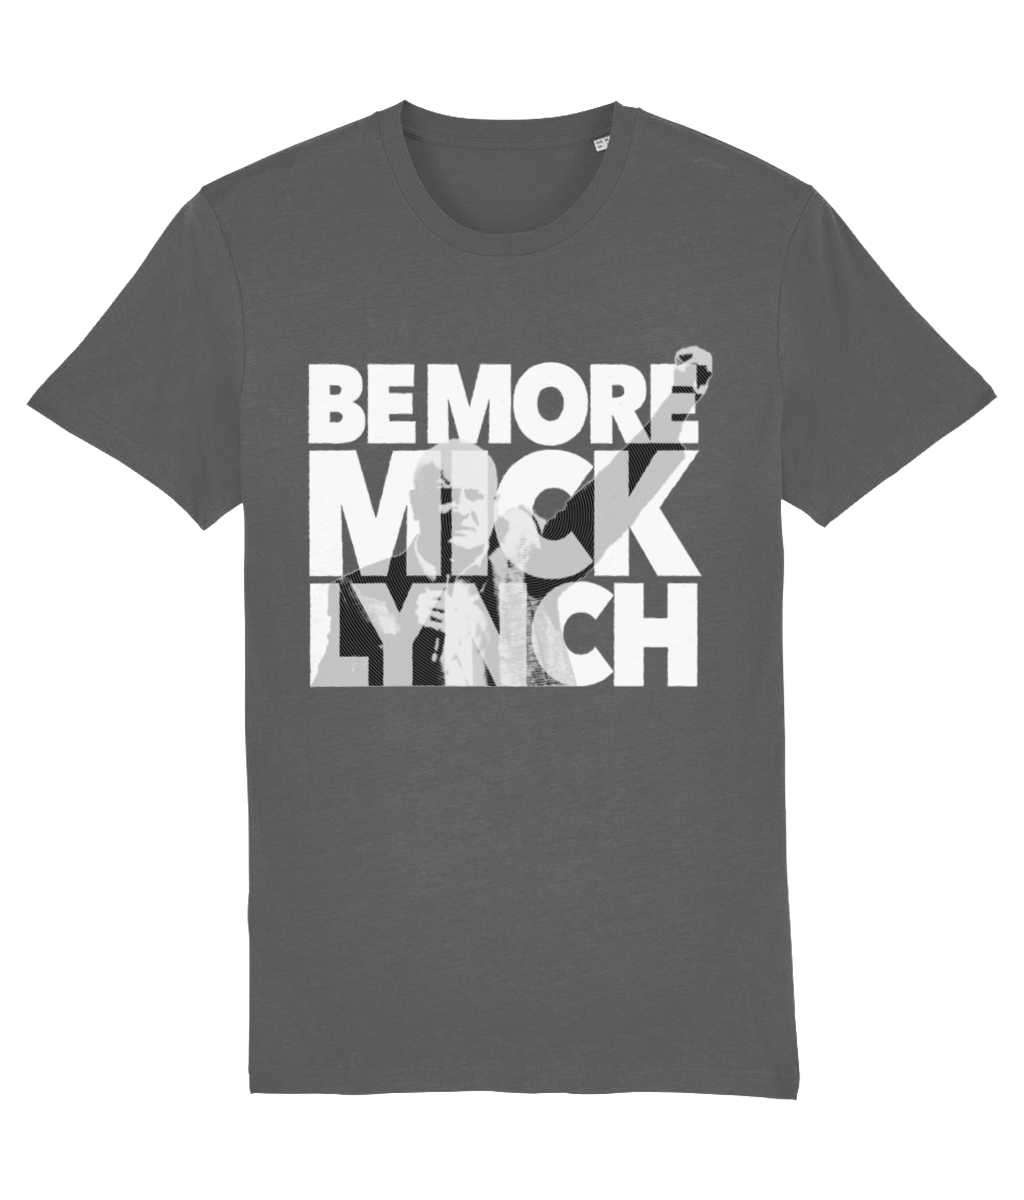 Be More Mick Lynch – Light on dark organic T-shirt